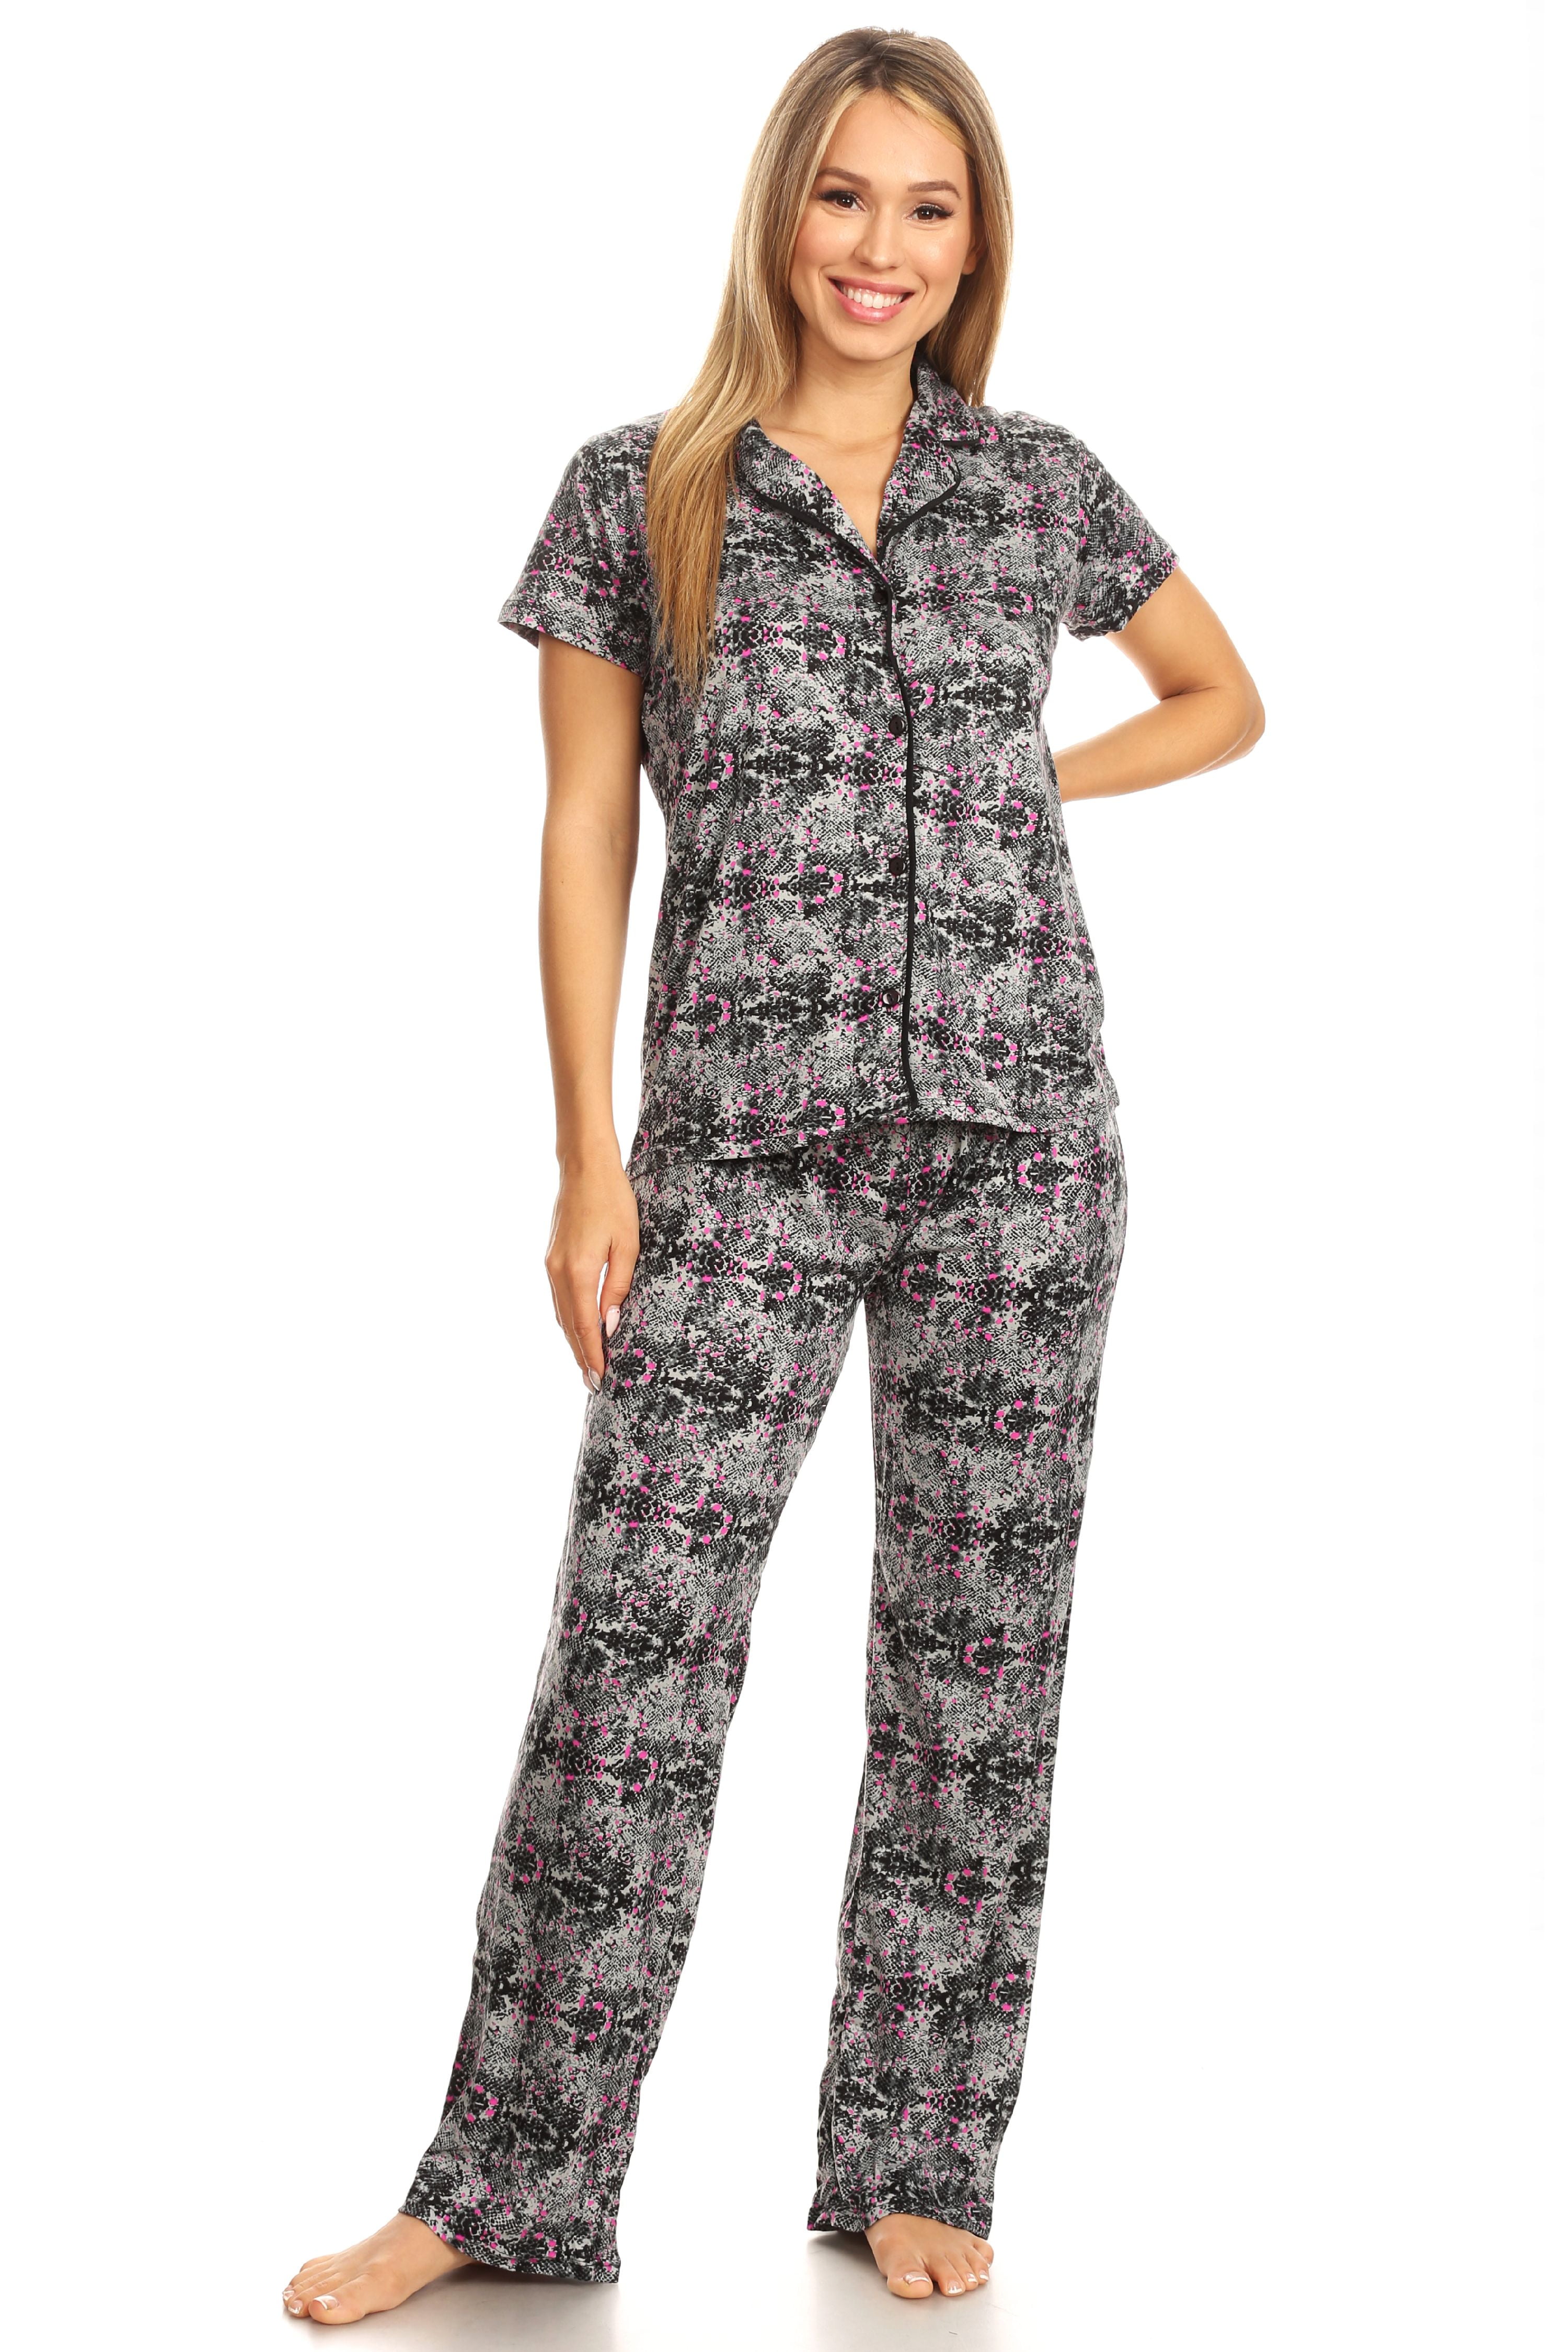 Fashion Brands Group - Womens Sleepwear Pajamas Set Woman Short Sleeve